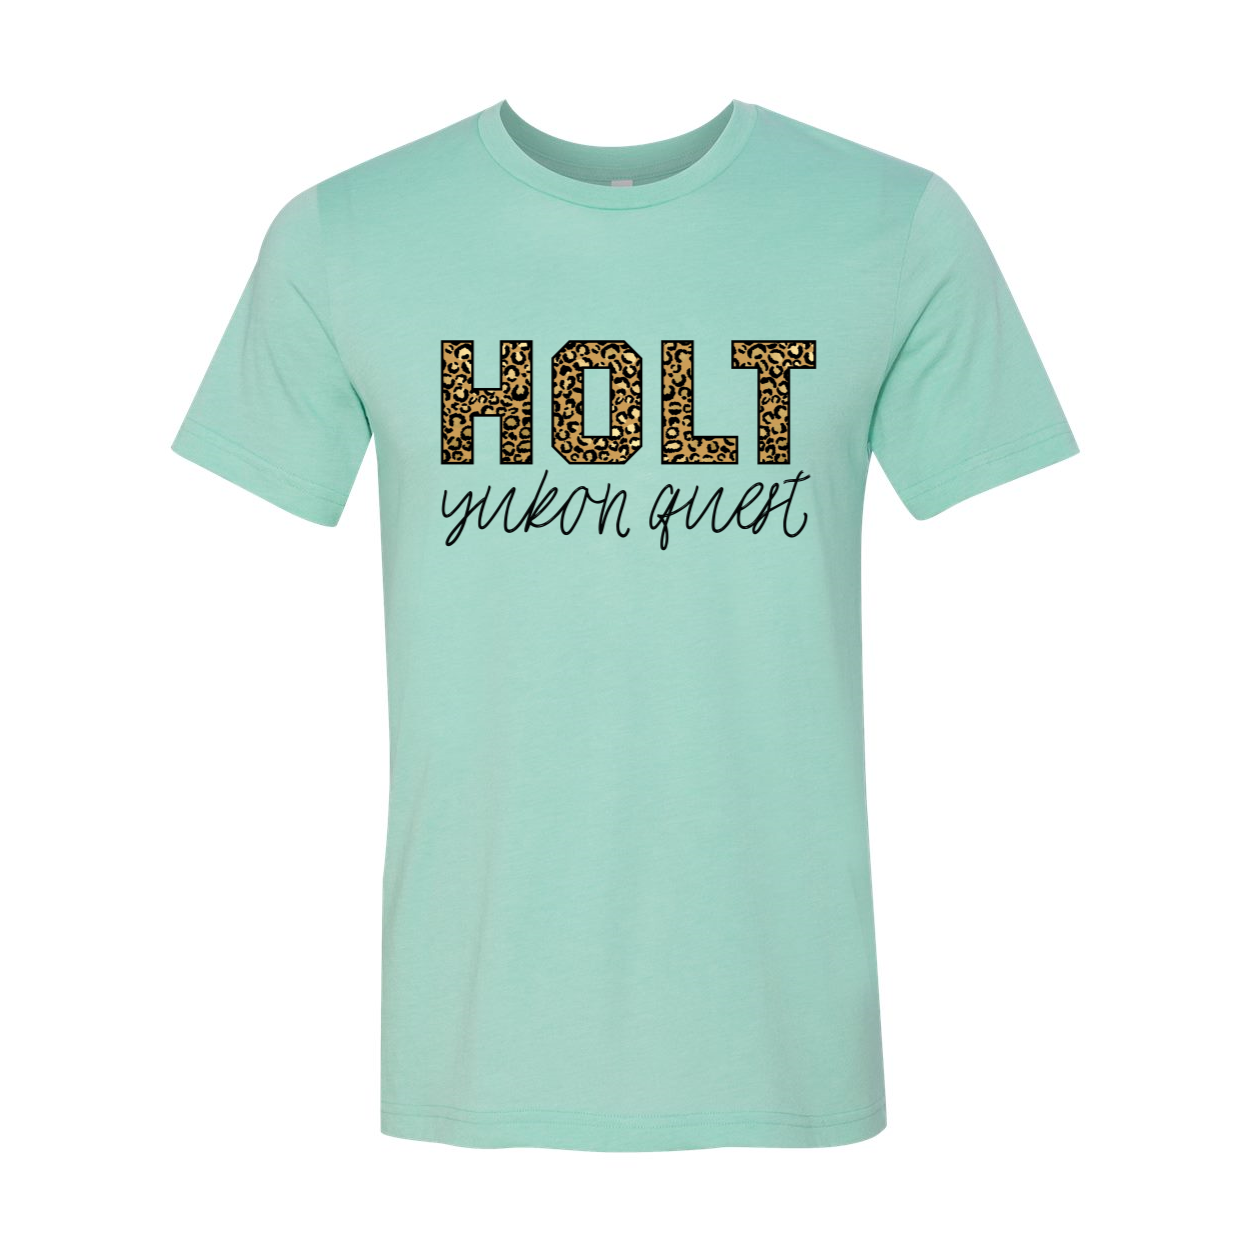 Holt Yukon Quest Leopard T-Shirt